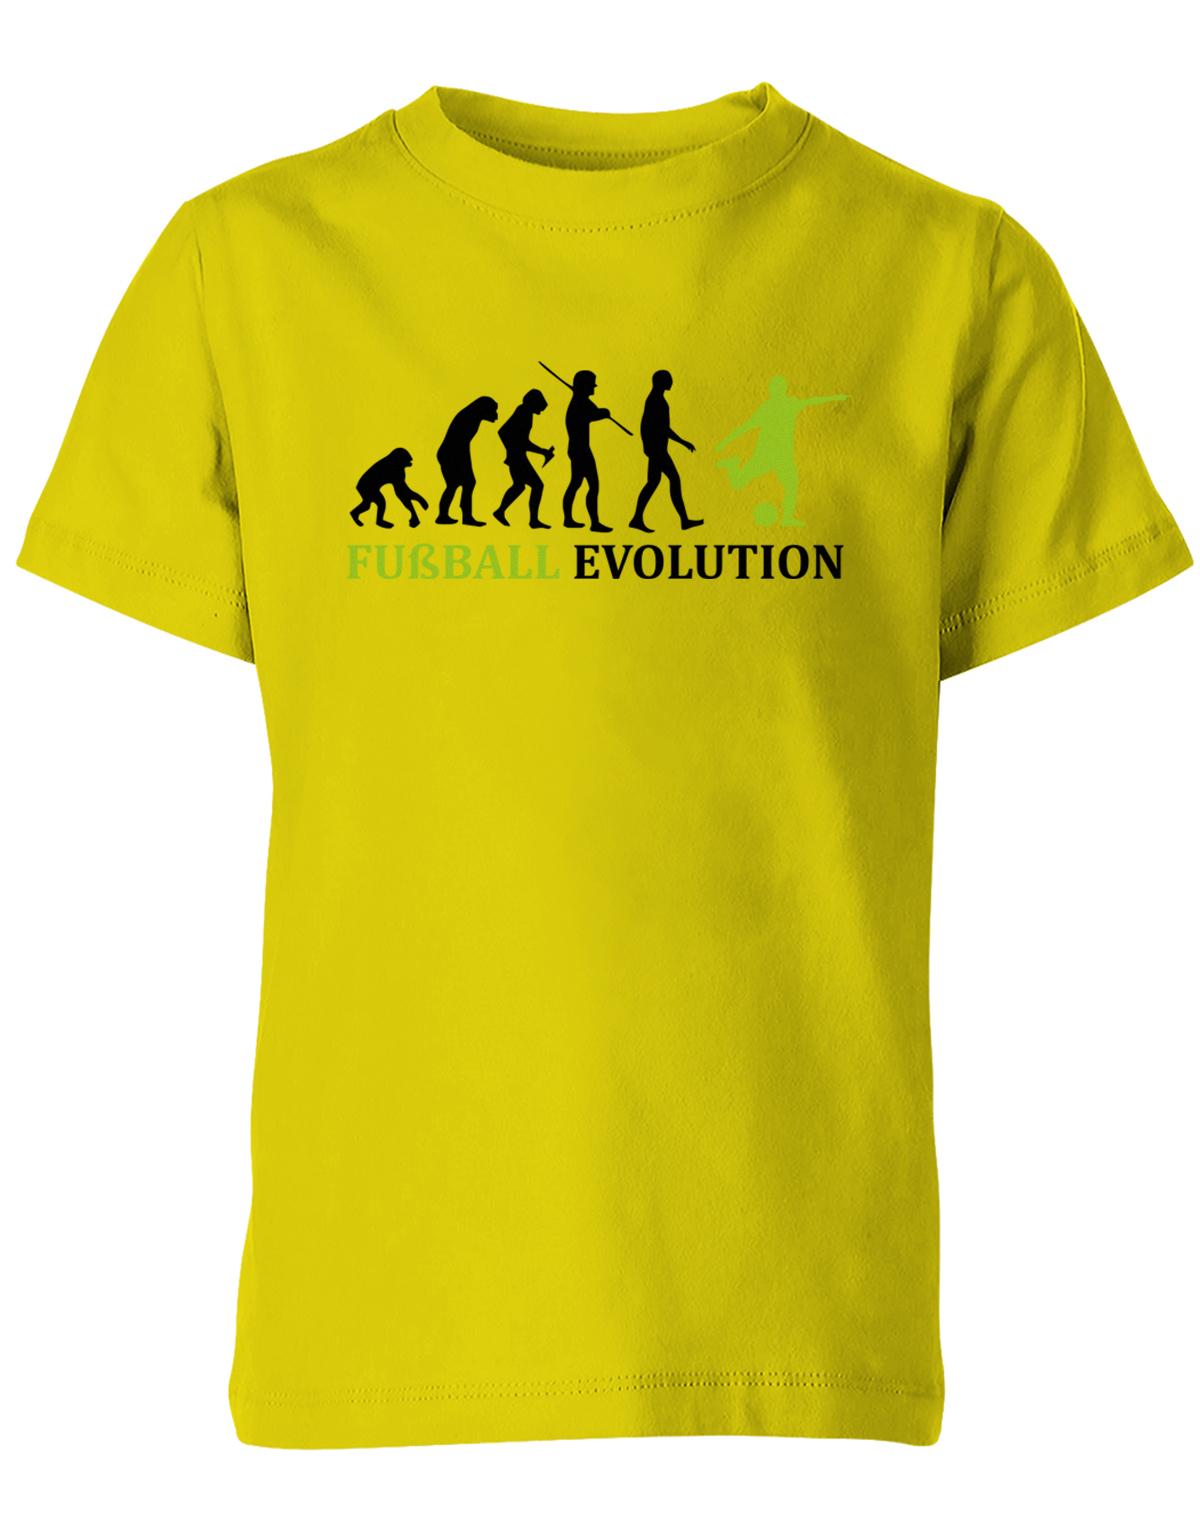 Fussball-Evolution-Kinder-Shirt-Gelb-Gr-n